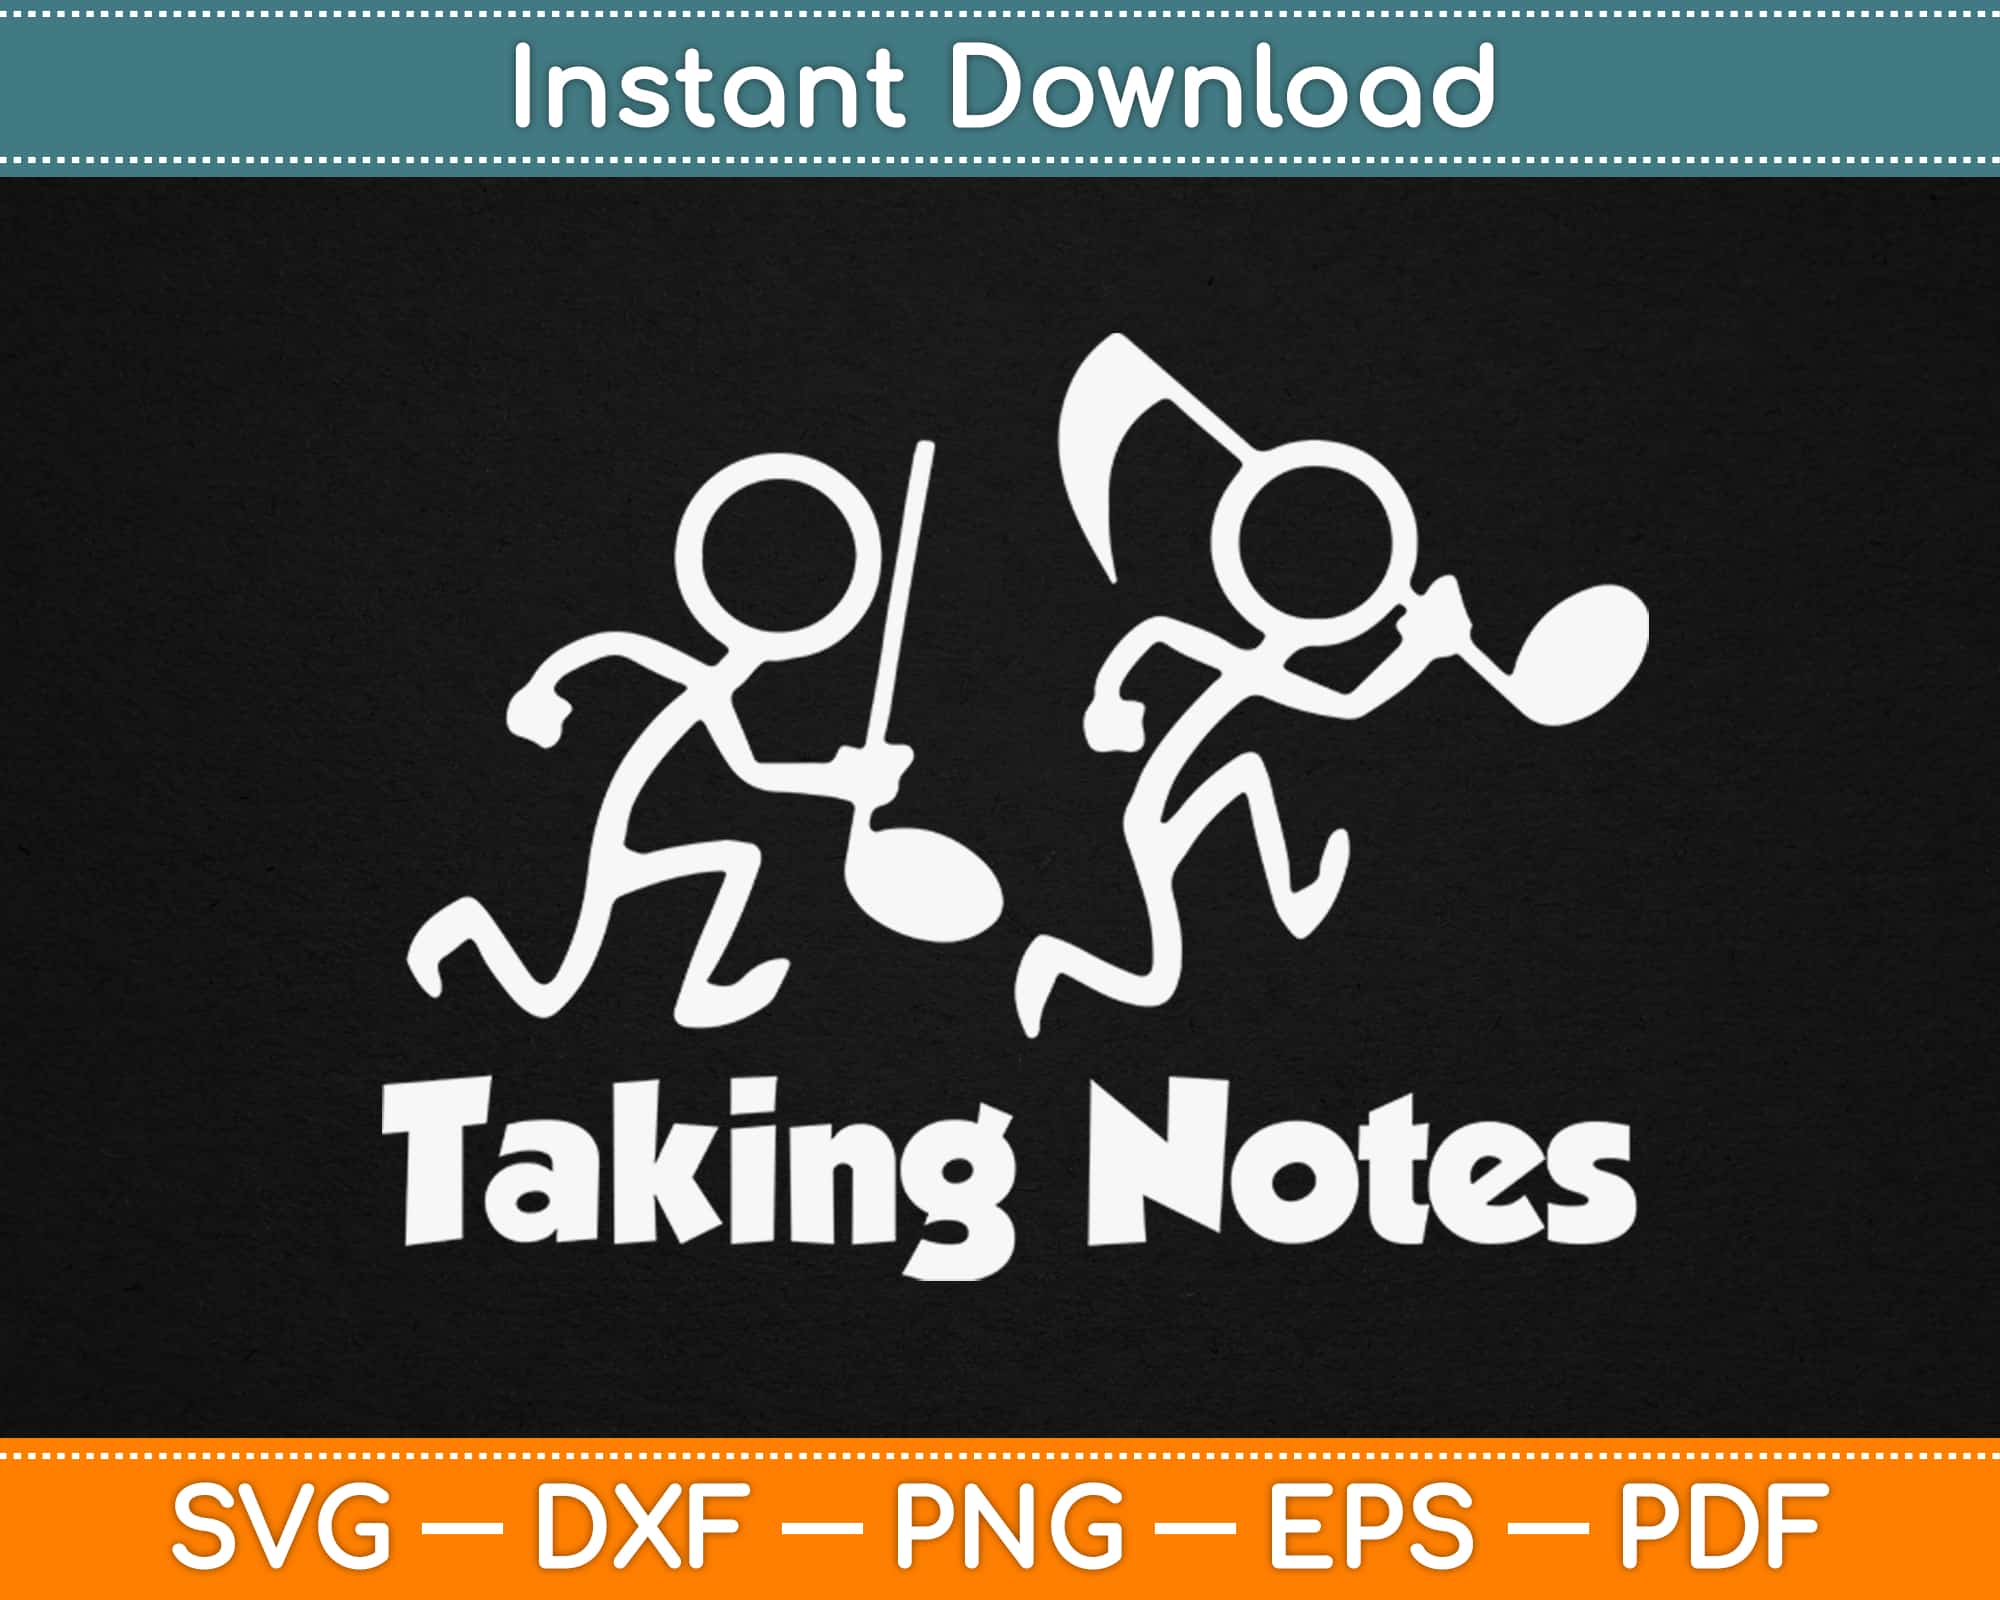 SVG > it motivation note post - Free SVG Image & Icon.